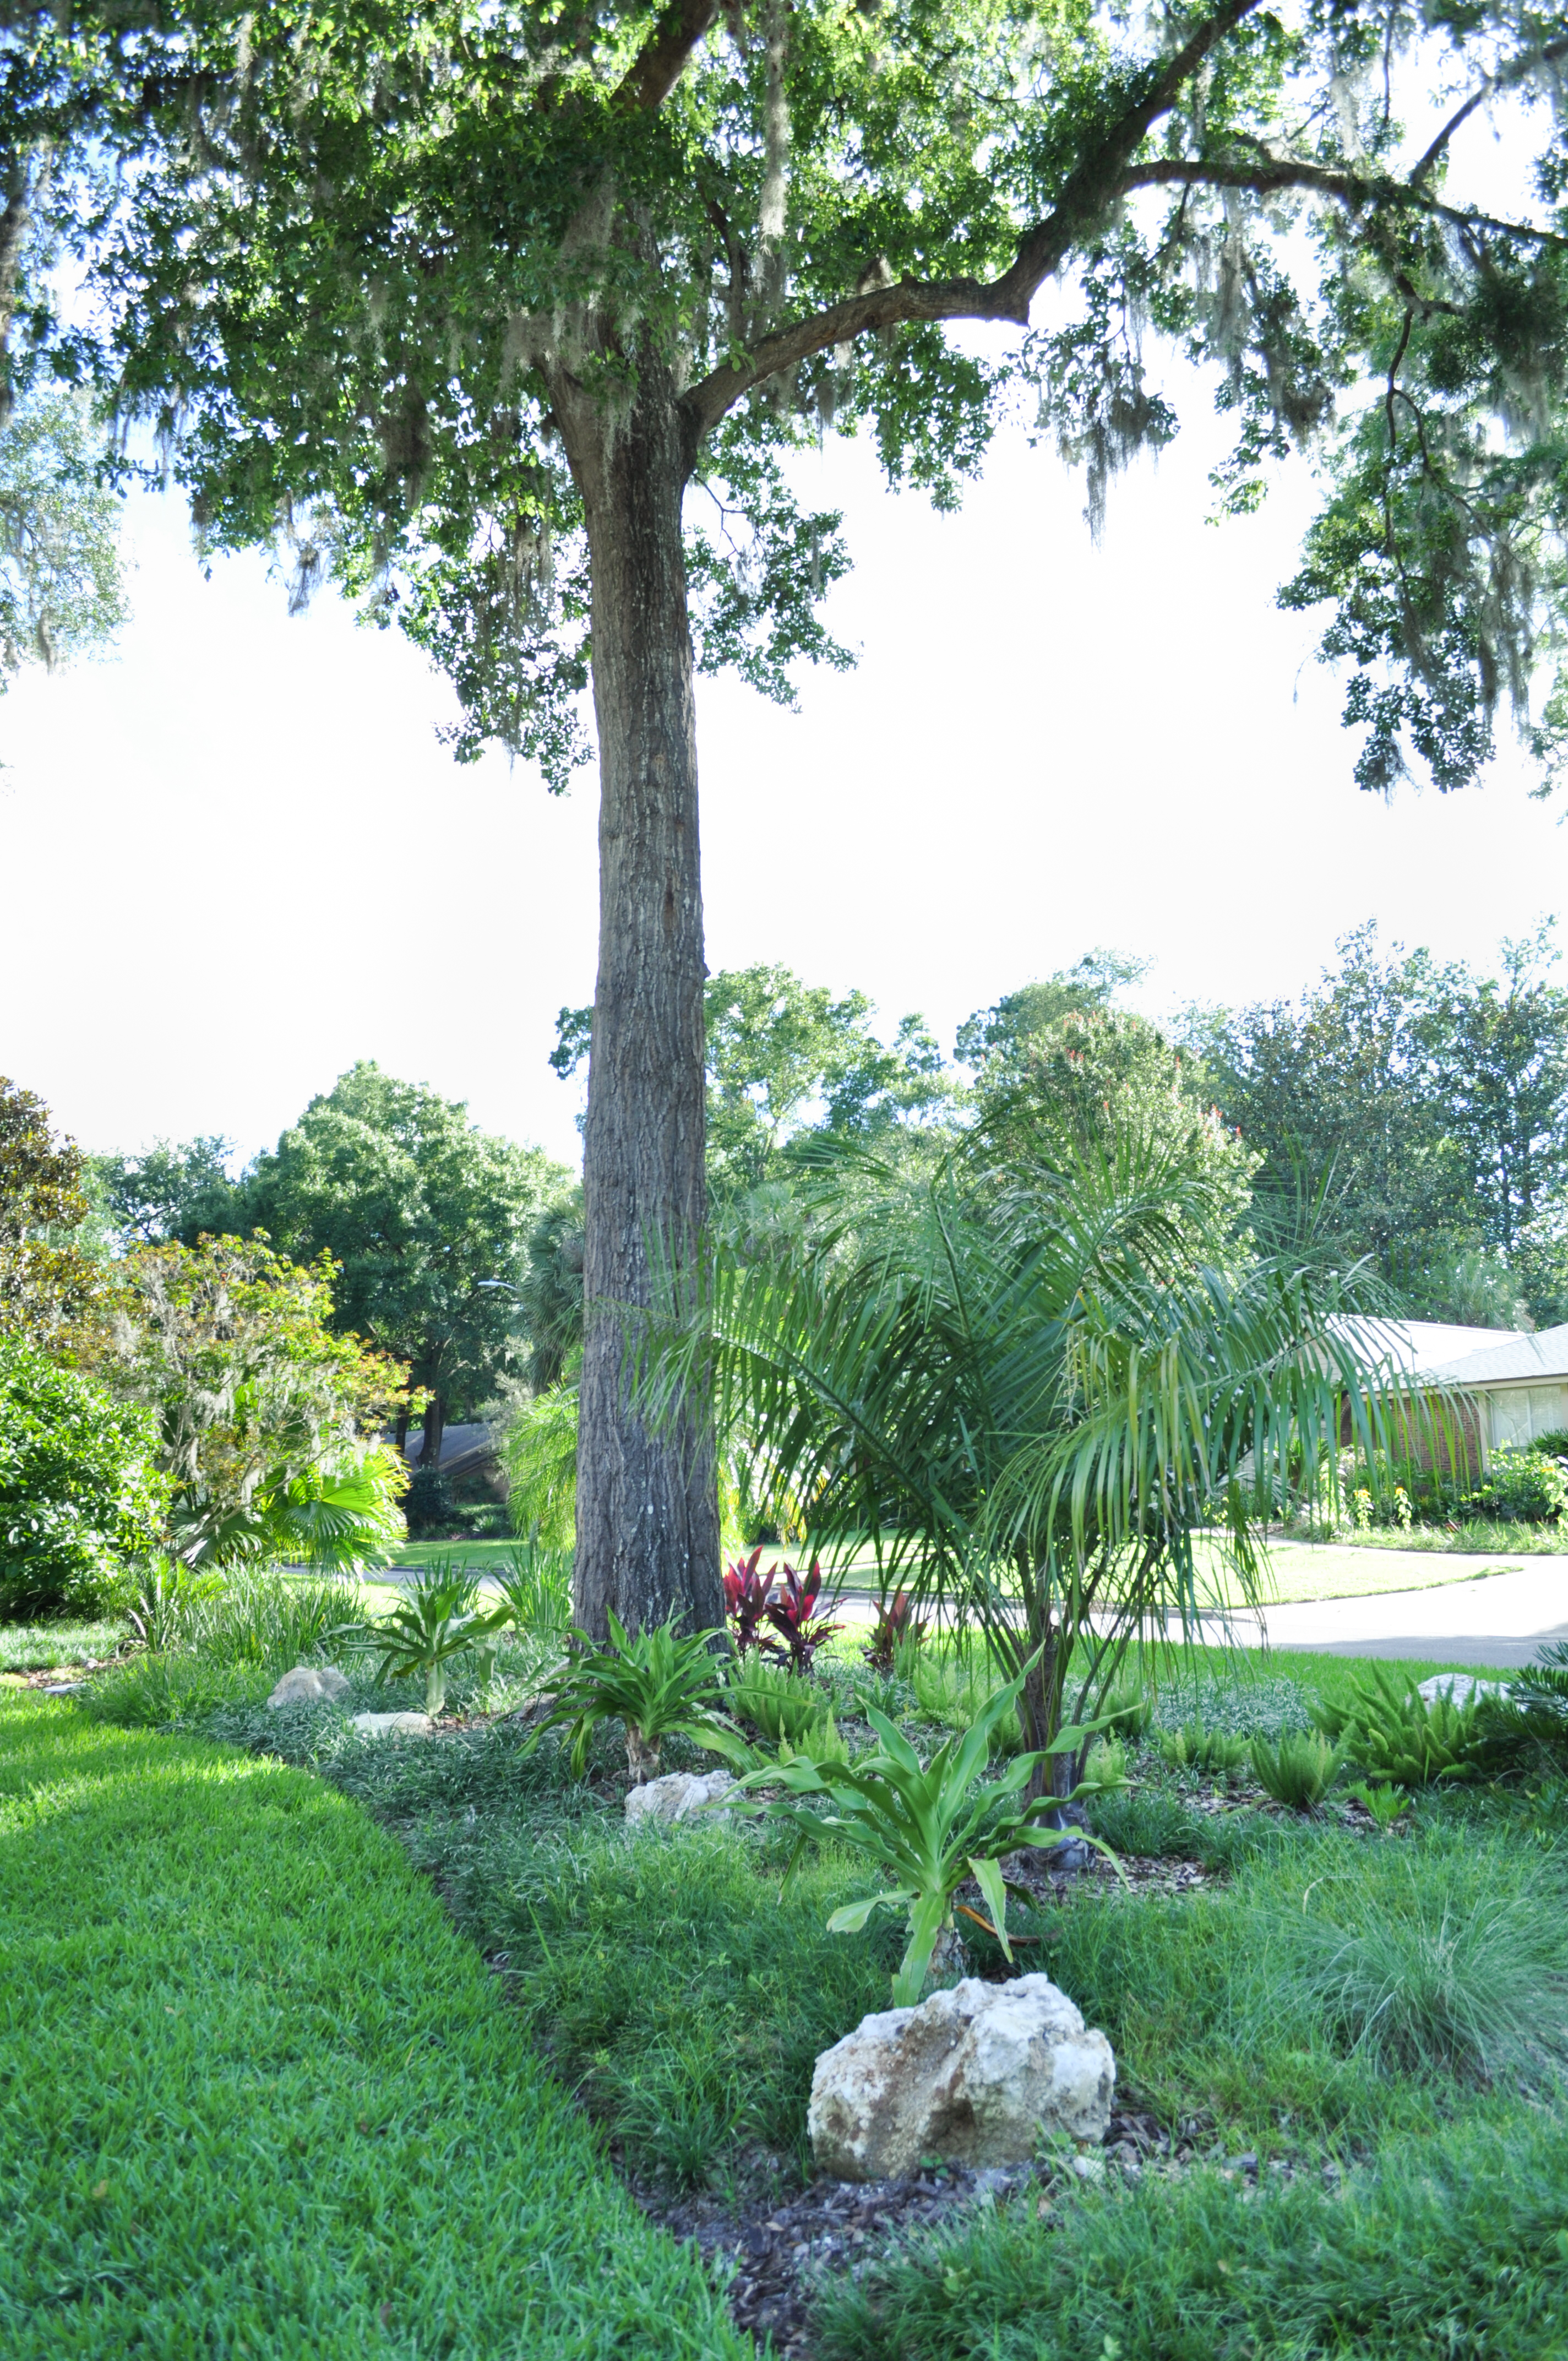 A beautiful Florida-friendly landscape yard with native plants